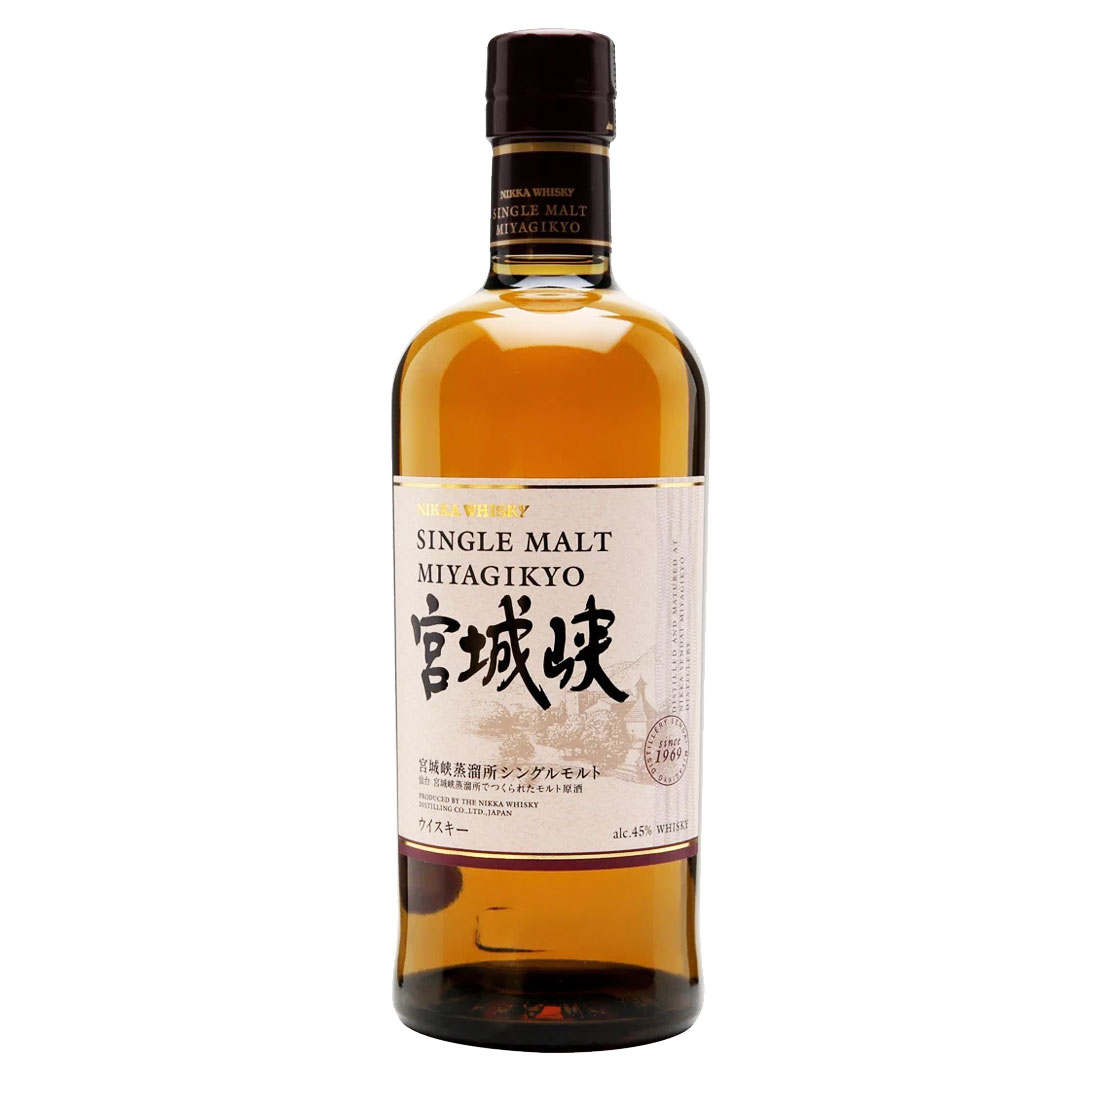 LB_Bottle-Nikka-Whisky-Single-Malt-Miyagikyo